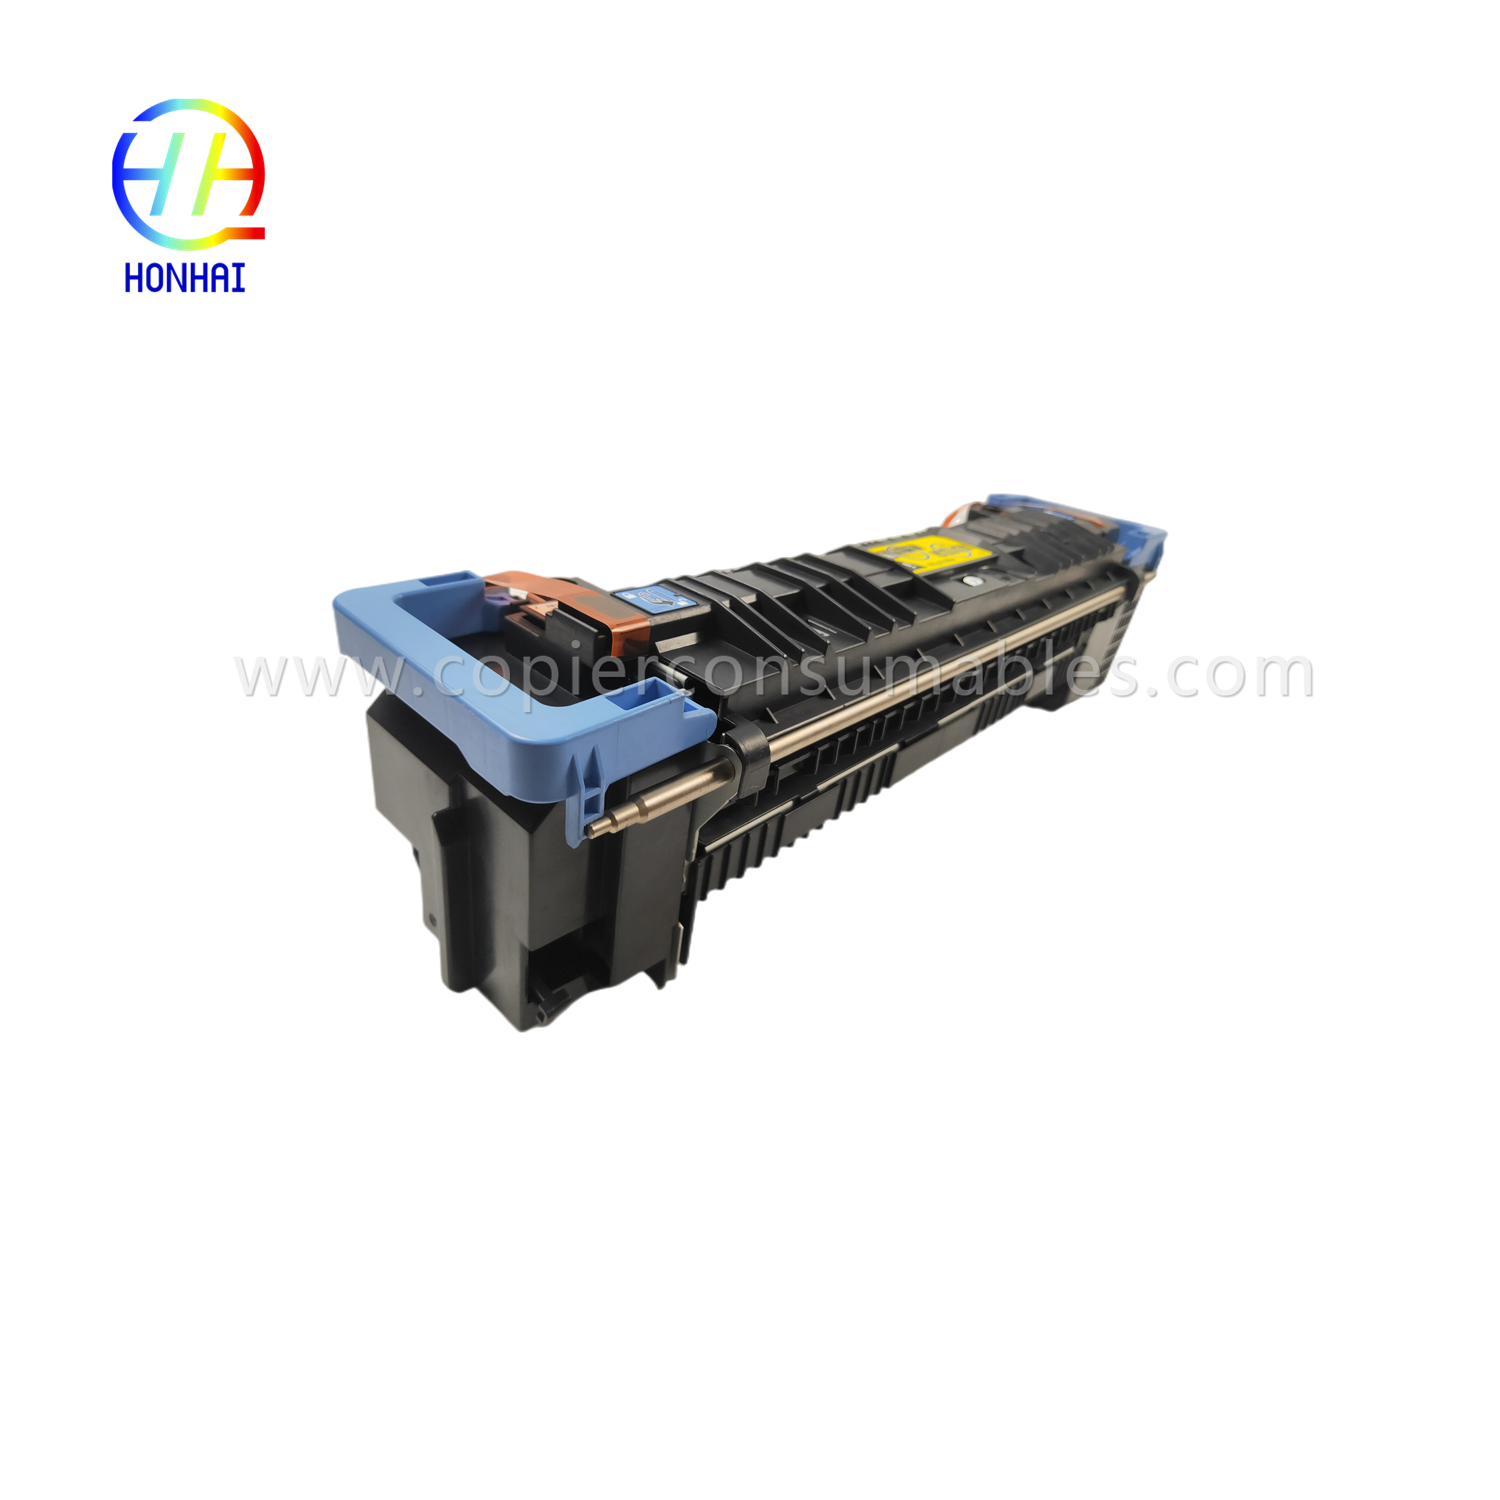 https://c585.goodao.net/fuser-assembly-unit-for-hp-m855-m880-m855dn-m855xh-m880z-m880z-c1n54-67901-c1n58-67901-fusing-assy-heating-fixing